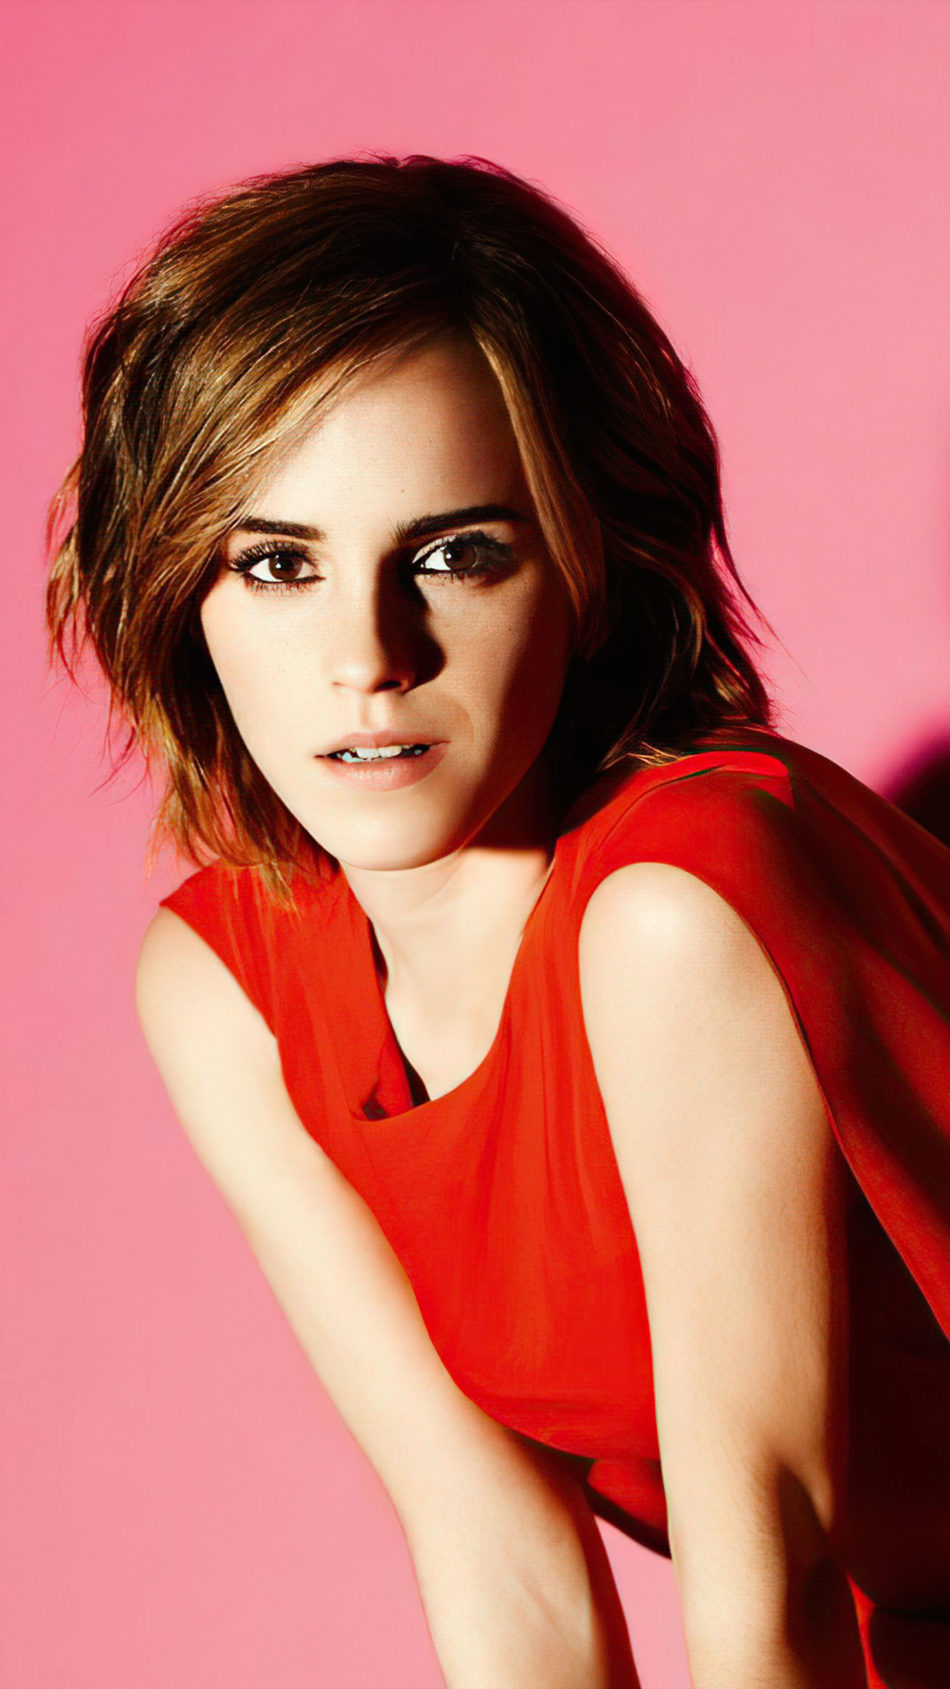 Emma Watson Red Dress 2021 Photoshoot 4K Ultra HD Mobile Wallpaper